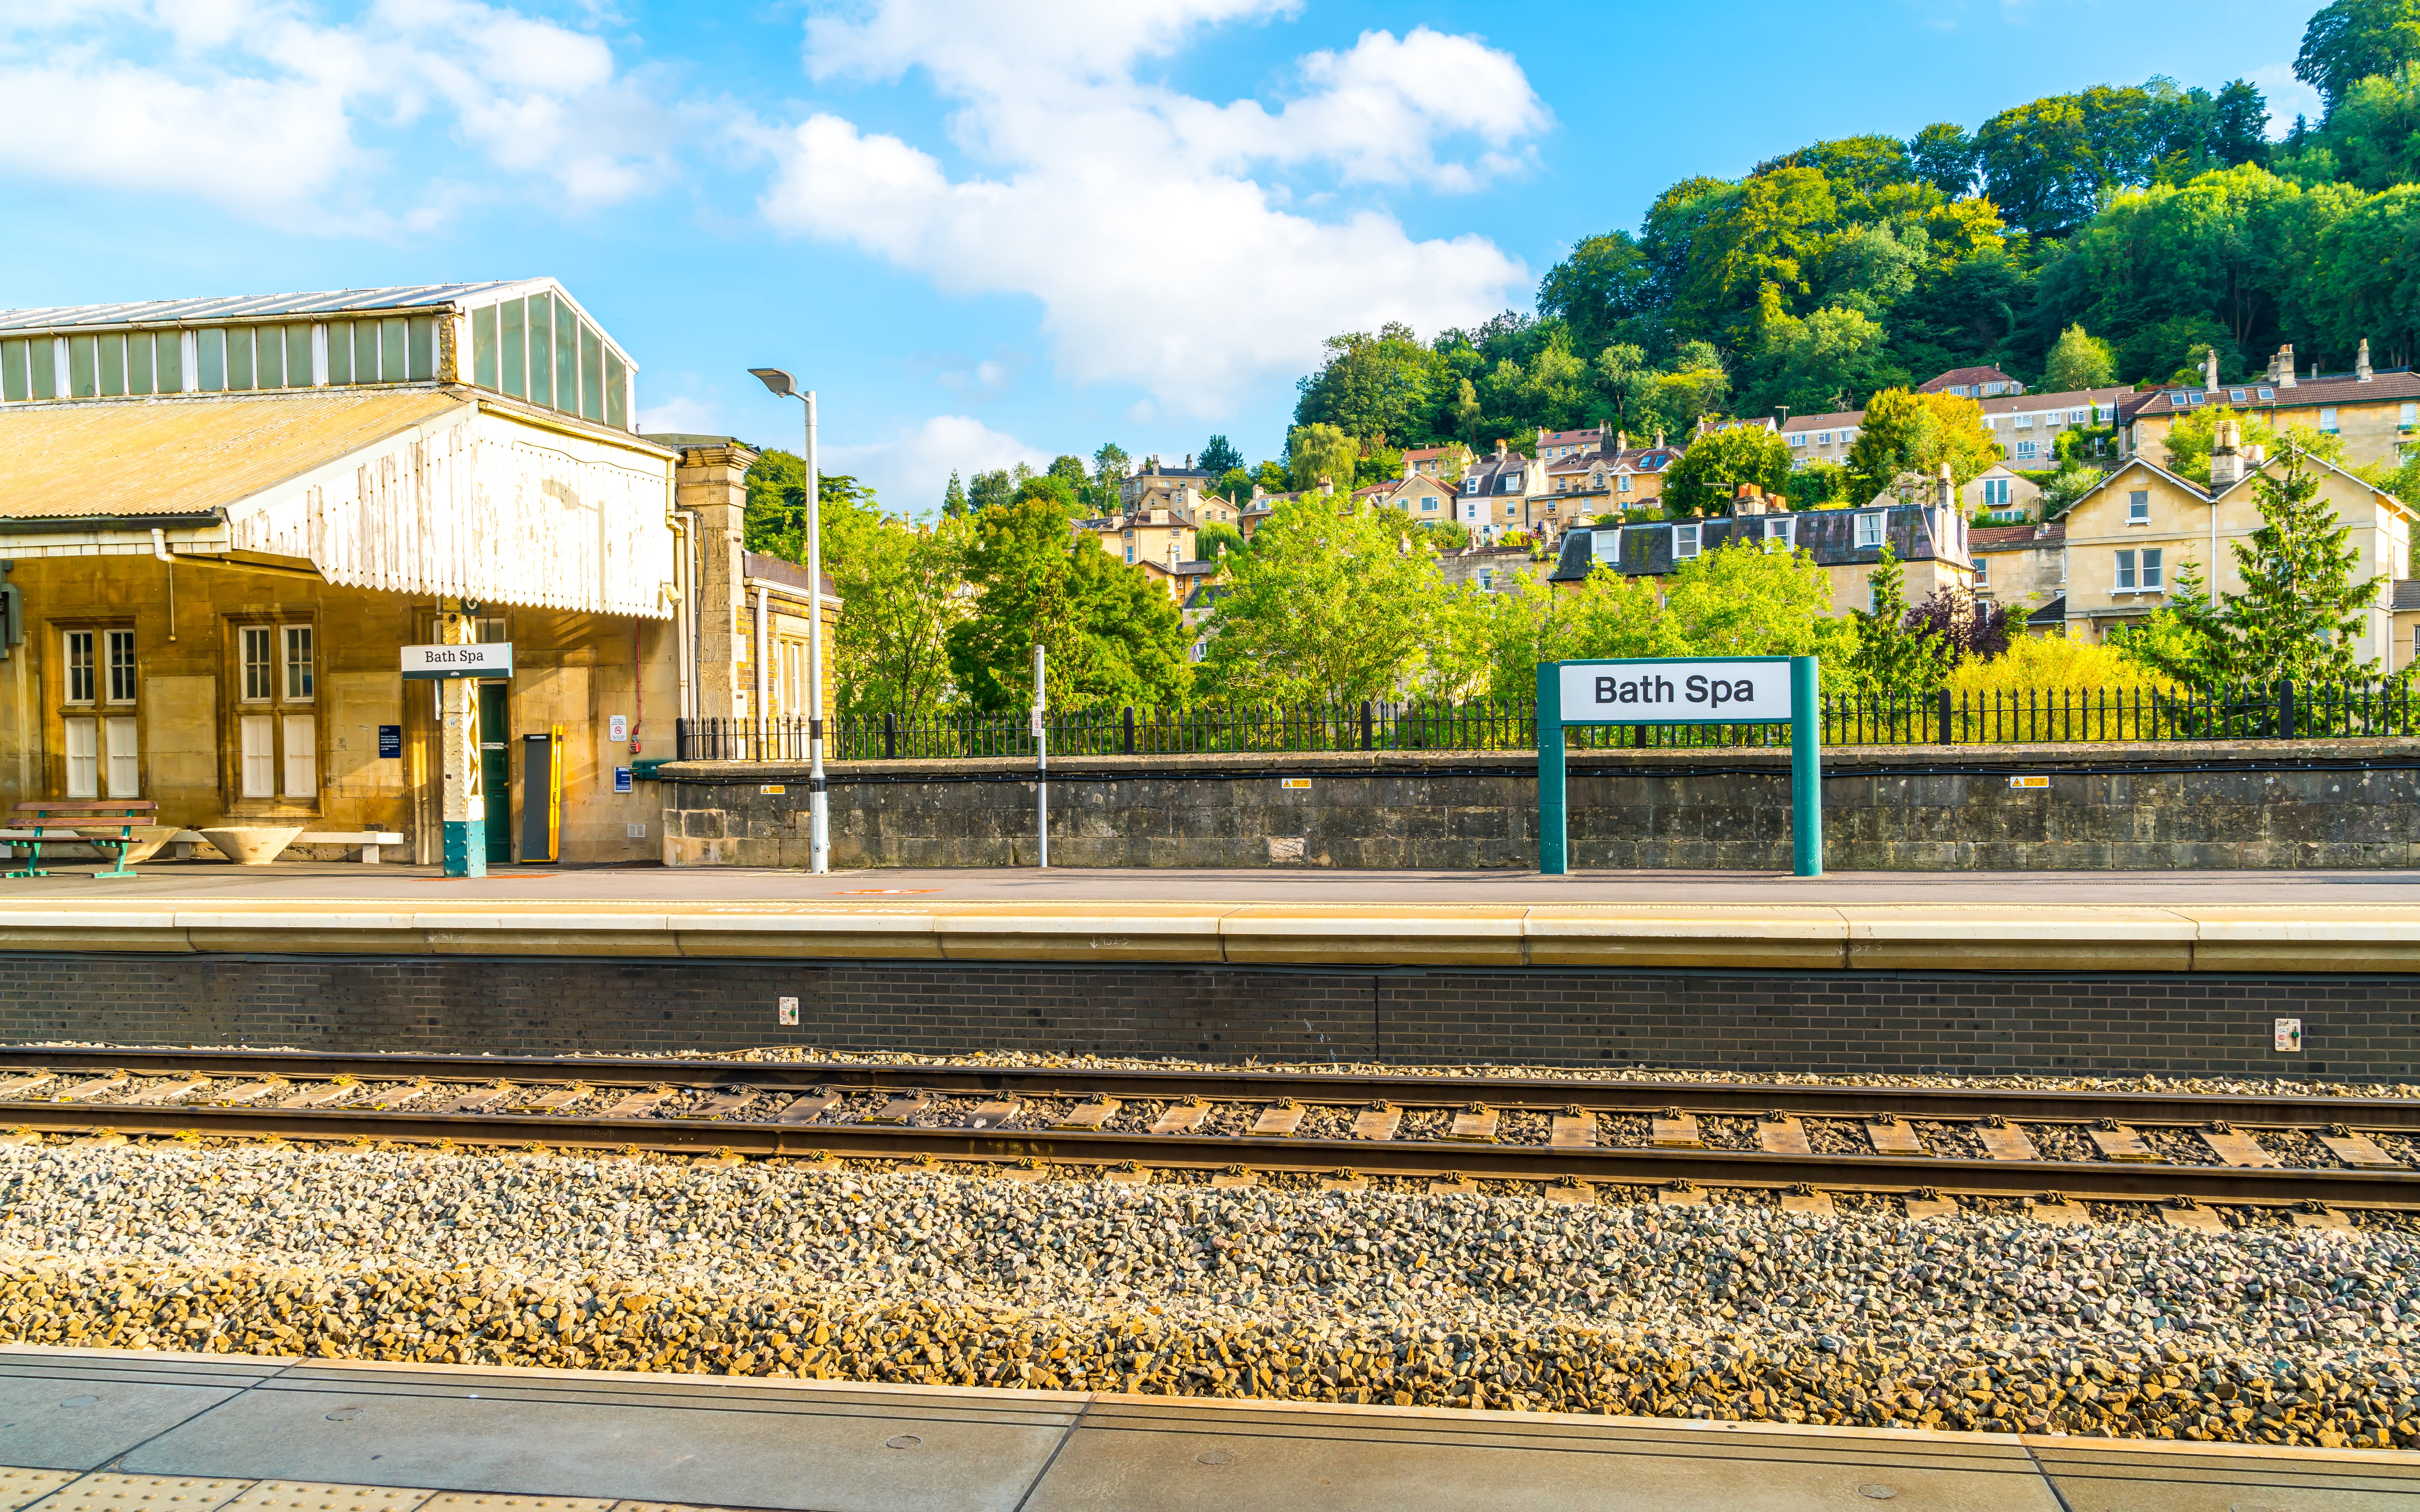 Image of Bath Spa railway station